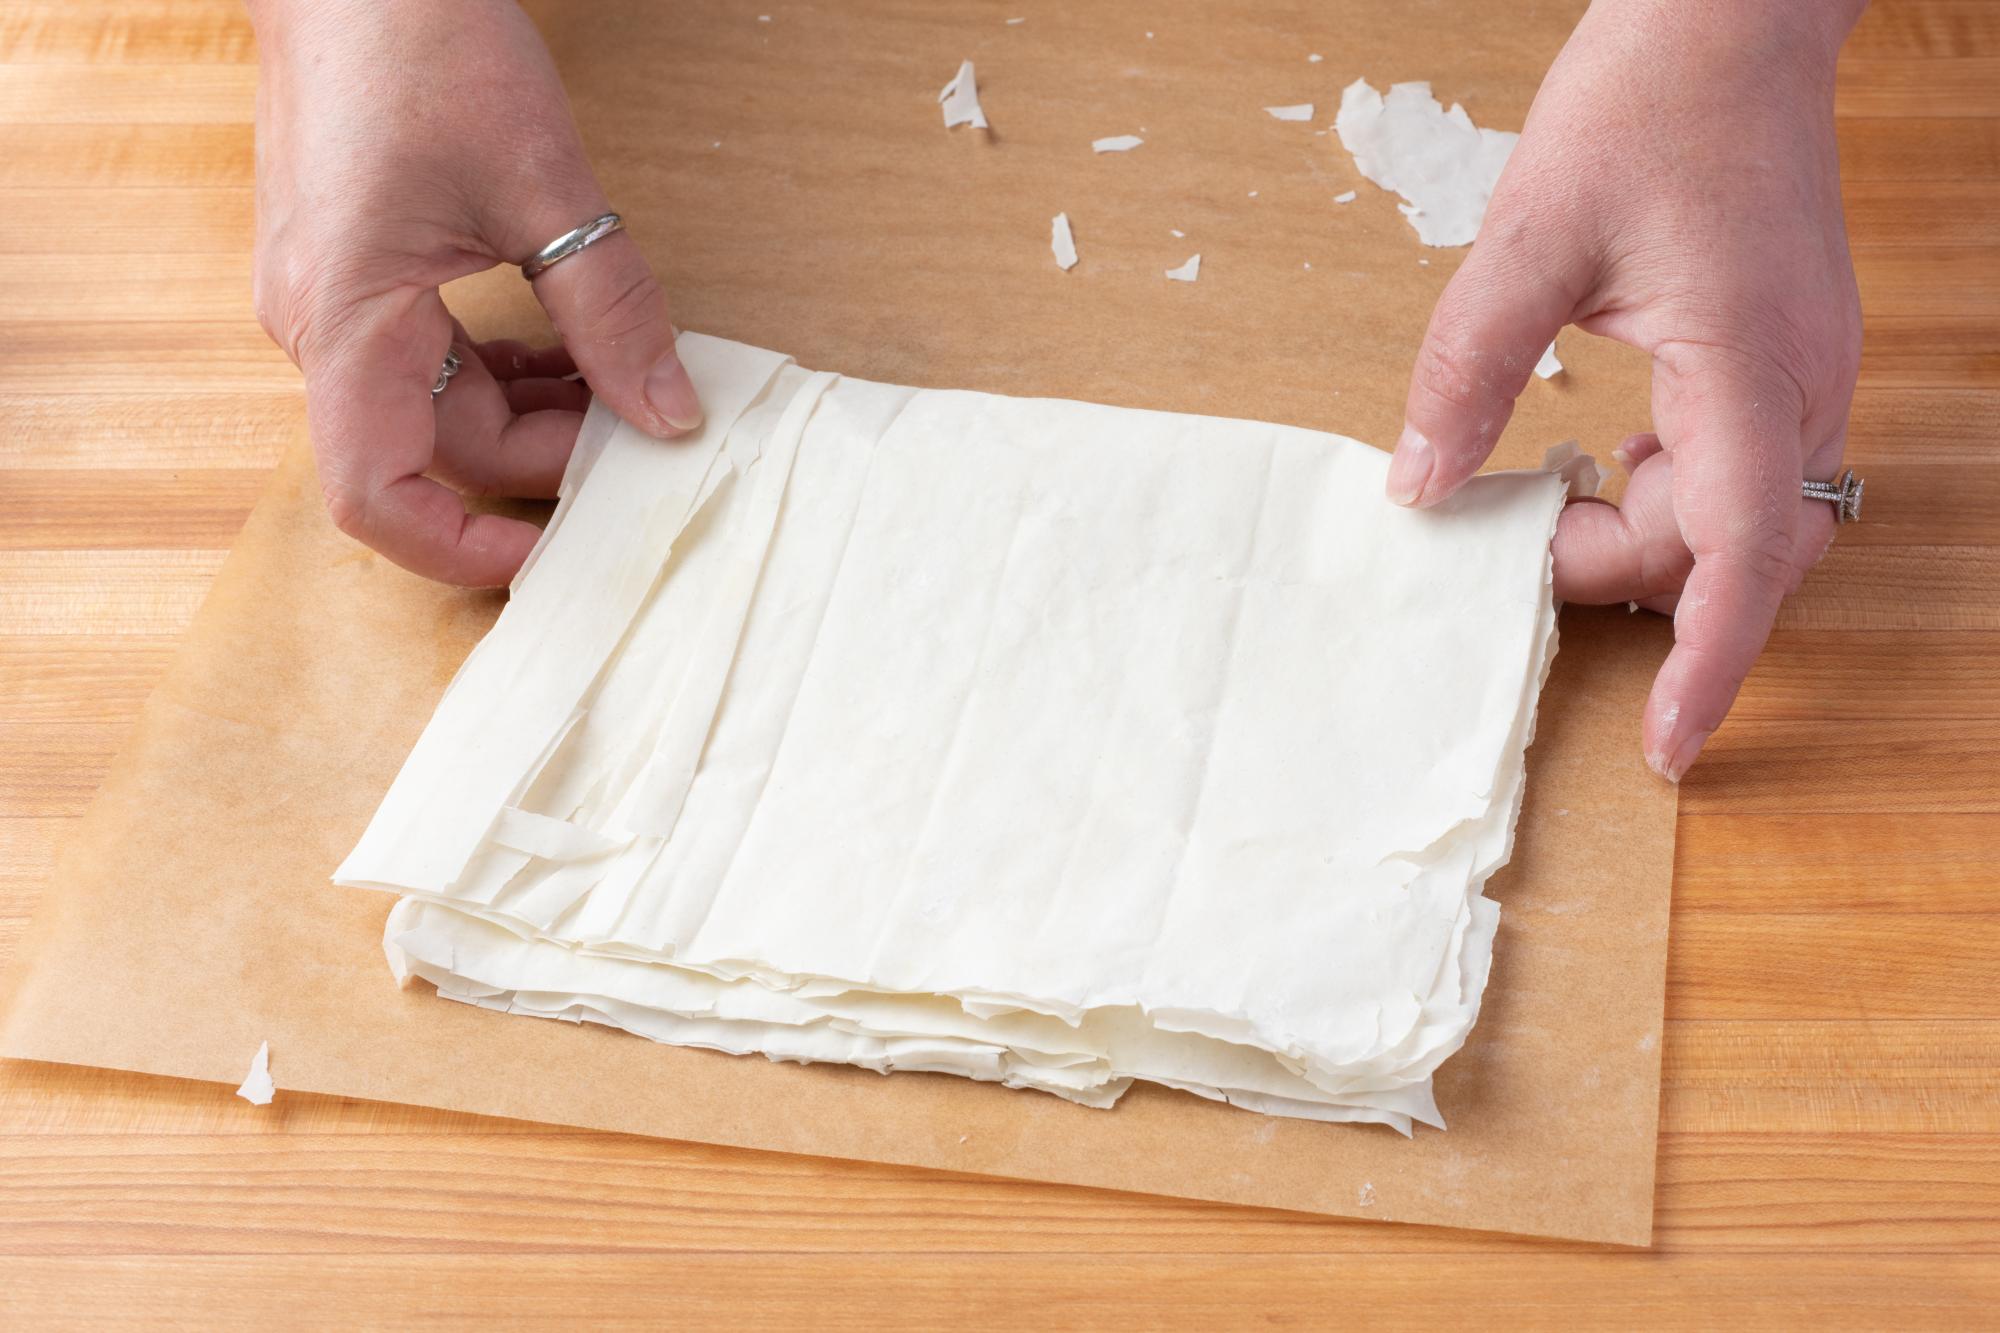 Folding the phyllo dough.